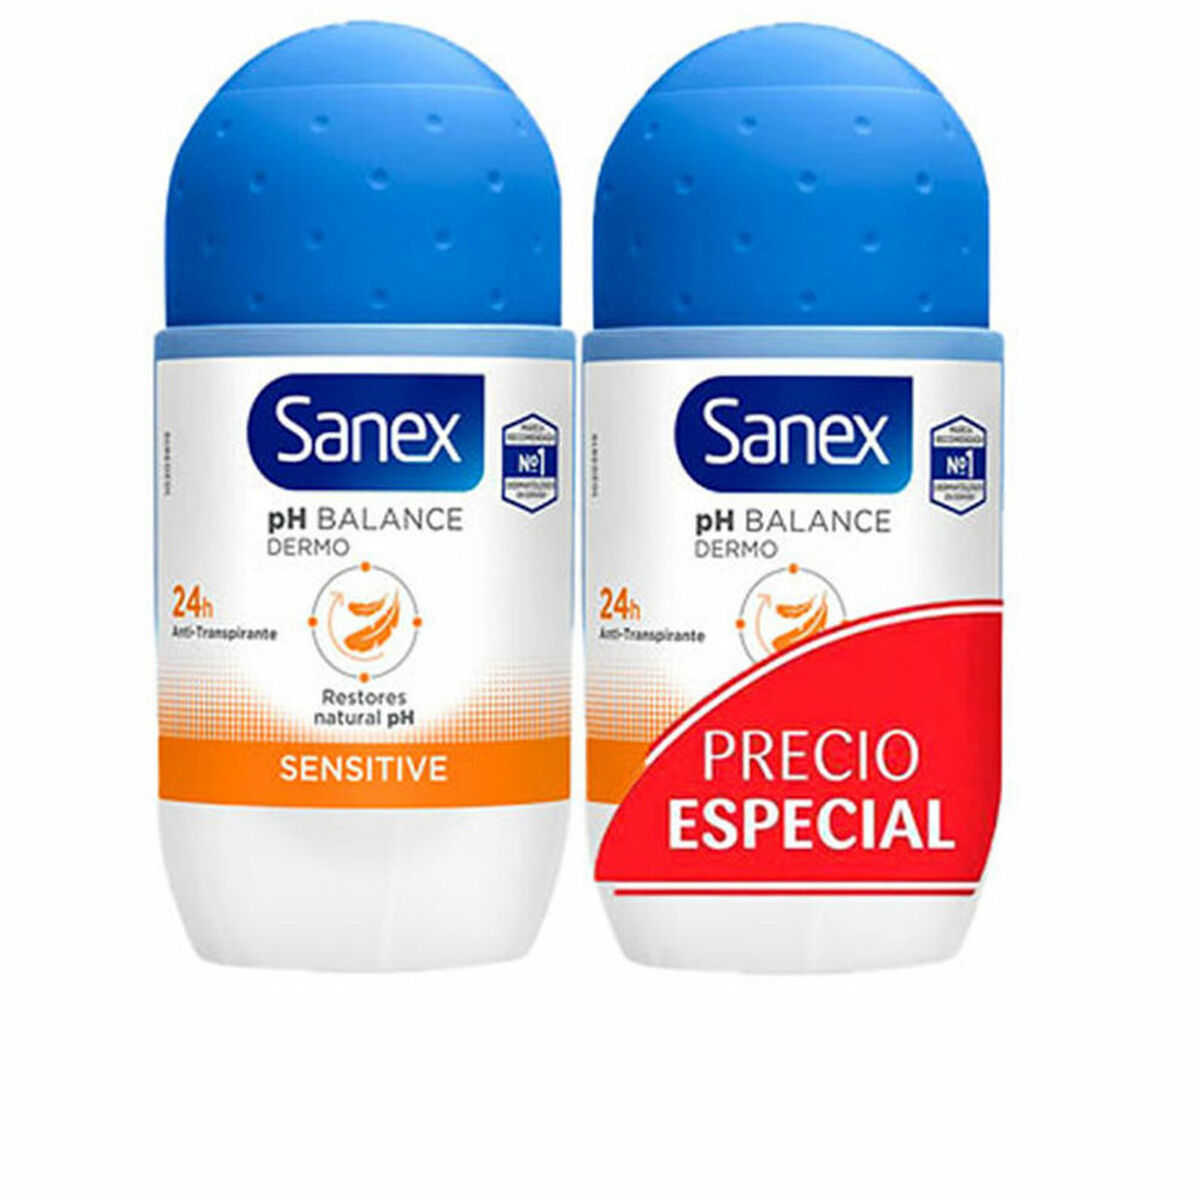 Roll-on Deodorant Sanex empfindlich 2 x 50 ml